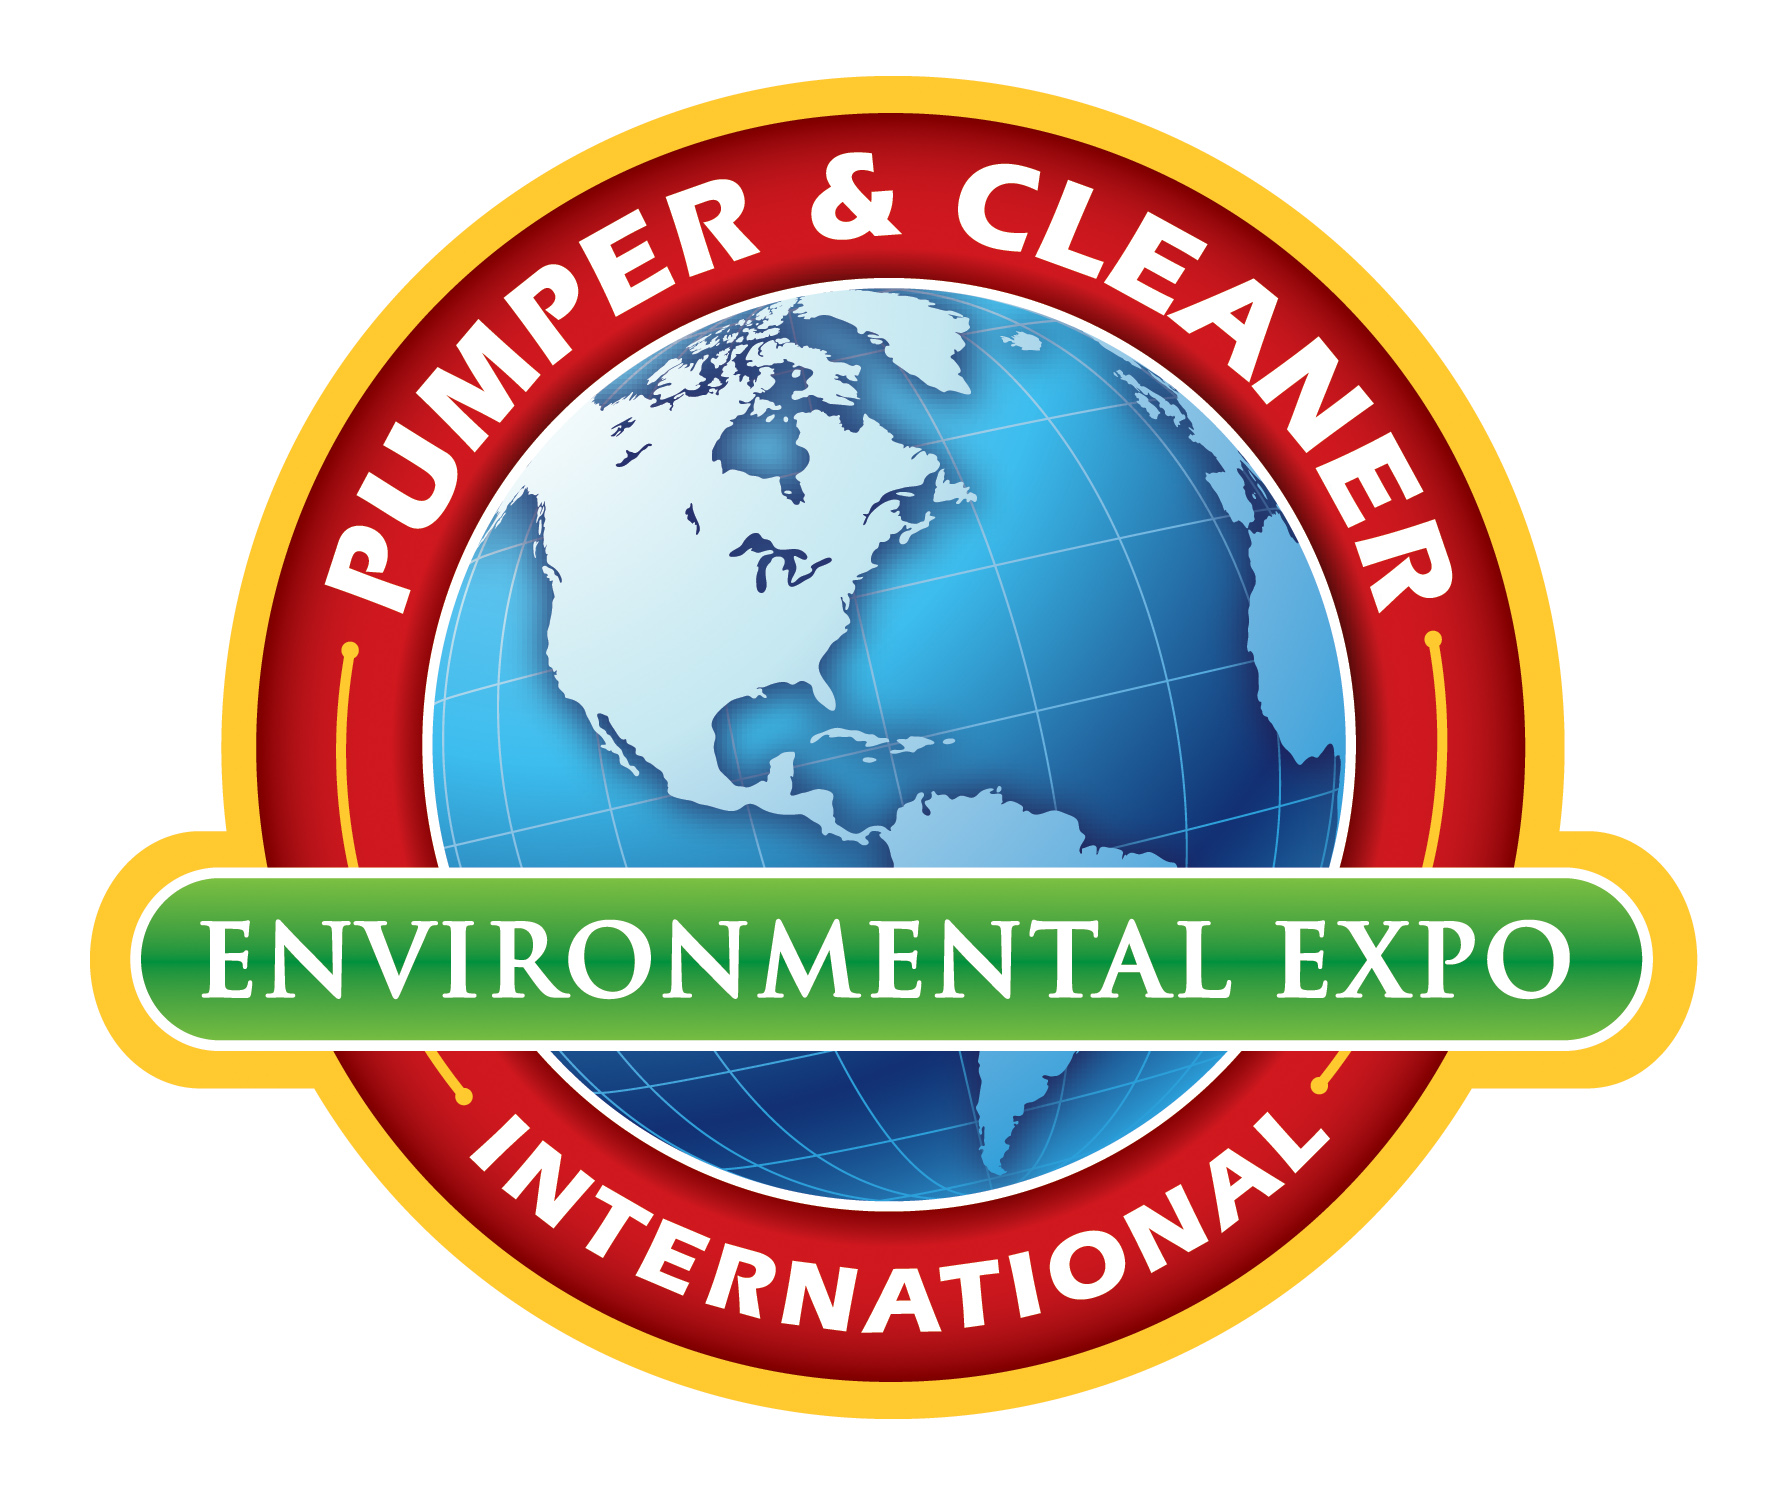 2013 Pumper & Cleaner Environmental Expo International